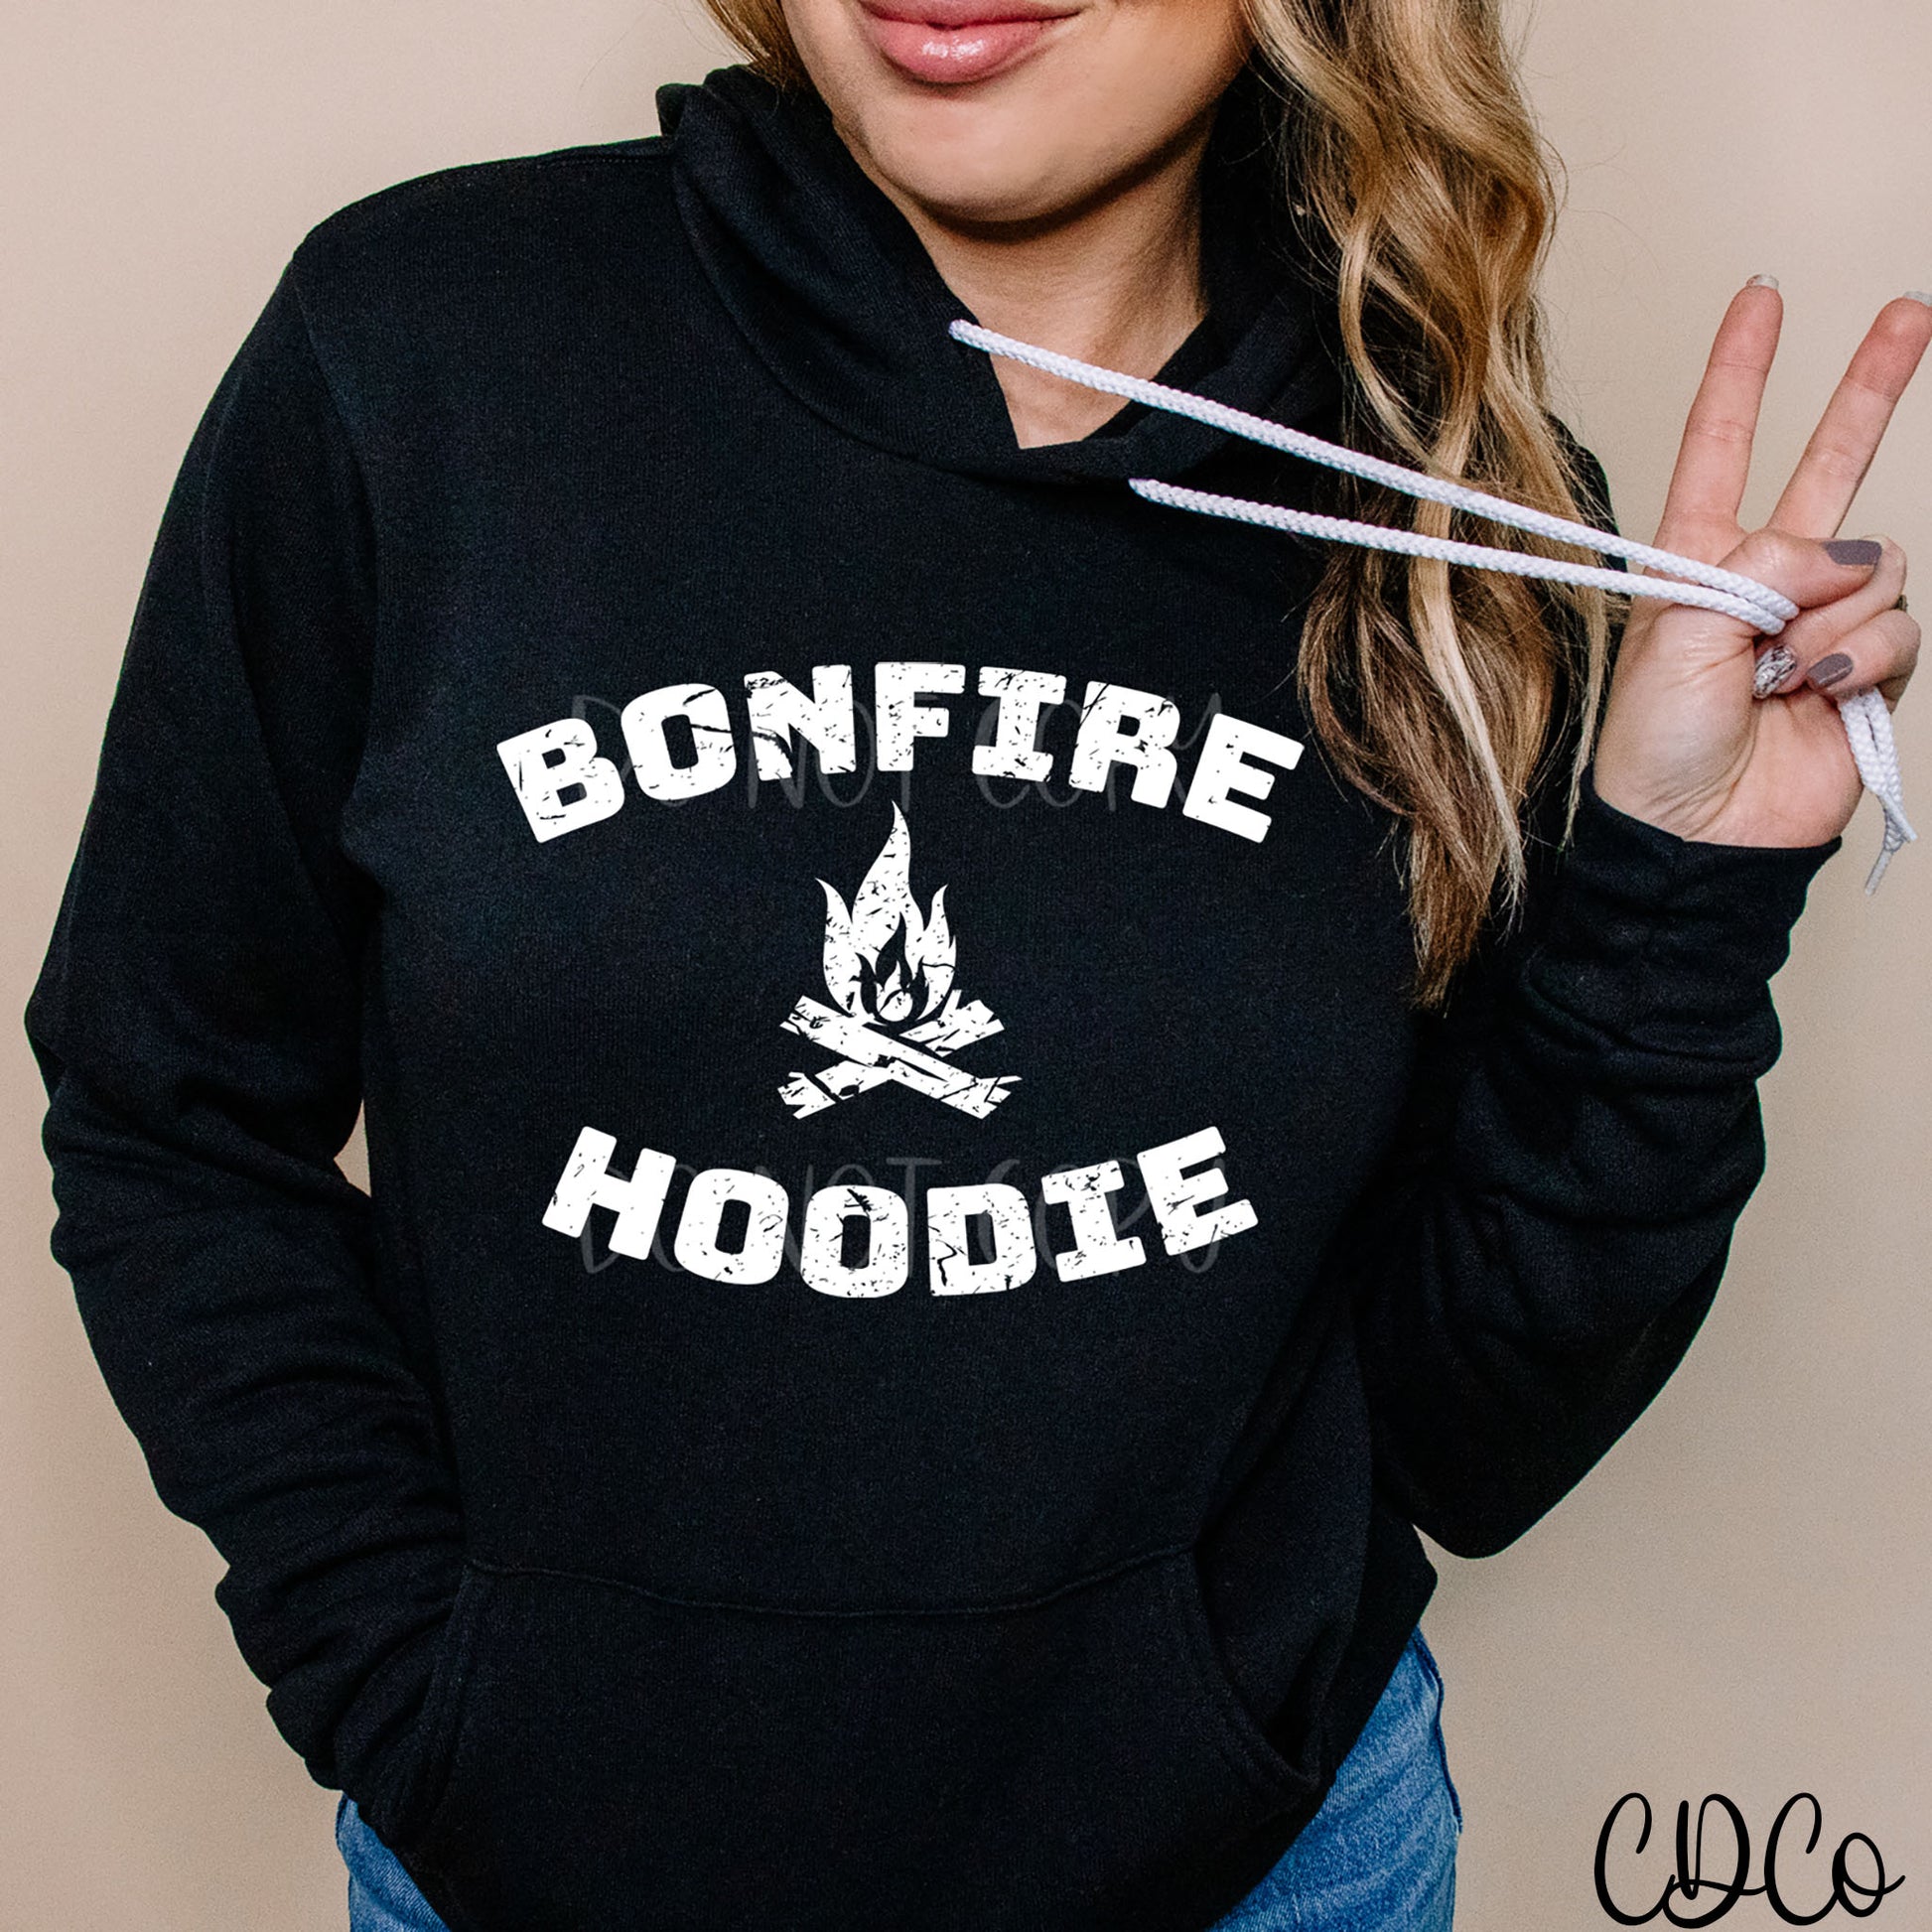 Bonfire Hoodie (325°) - Chase Design Co.